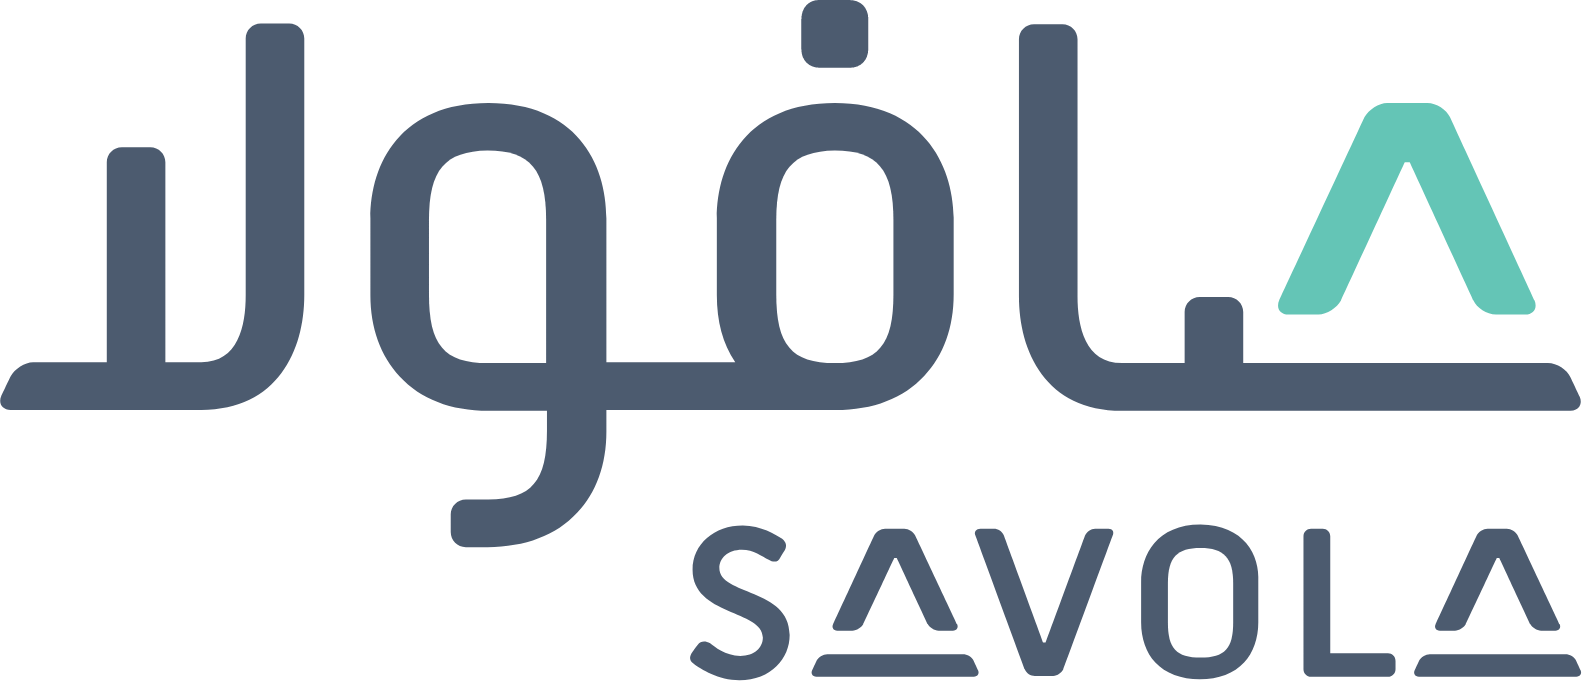 Savola Group logo large (transparent PNG)